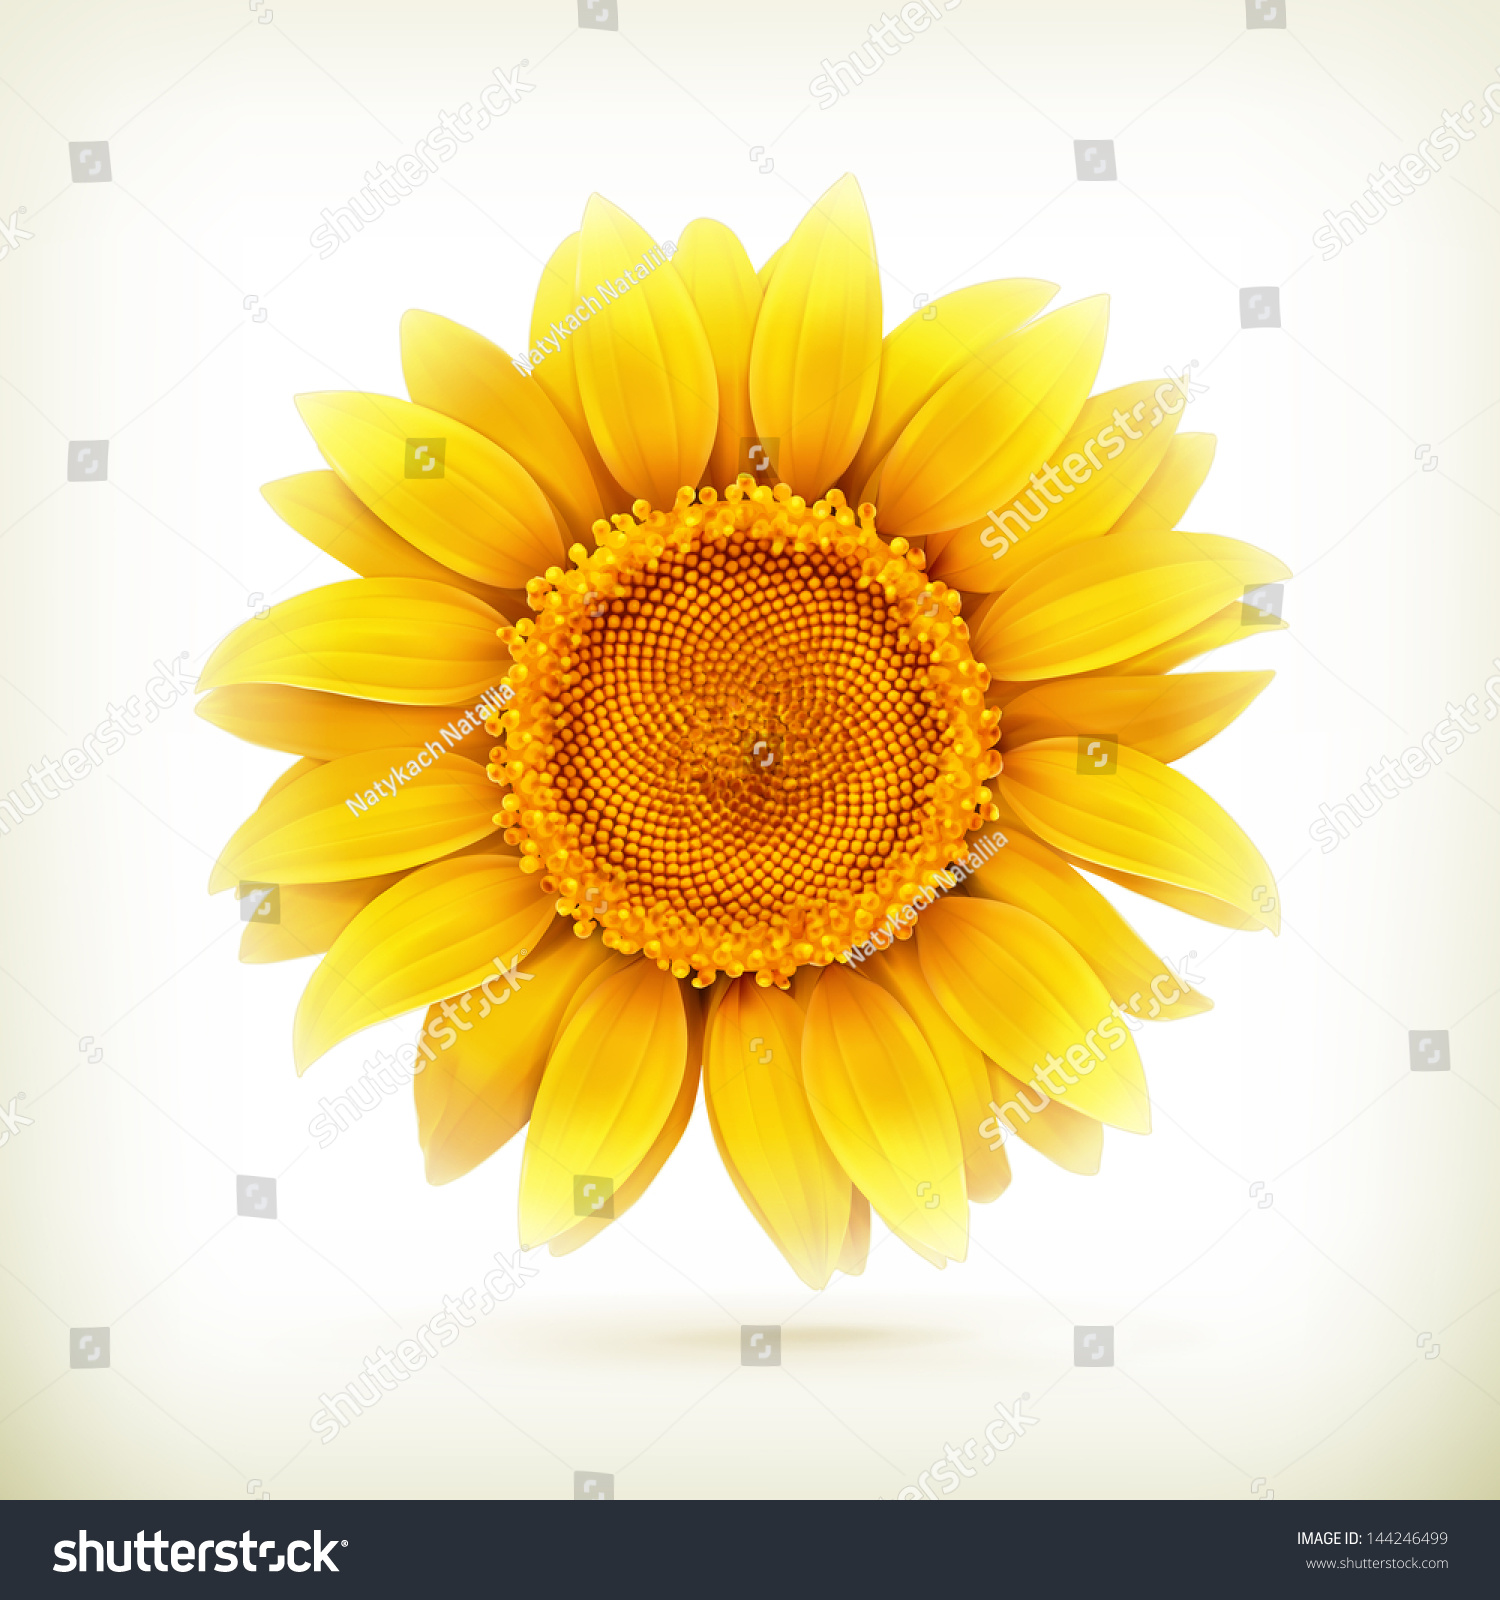 SVG of Sunflower, high quality vector illustration svg